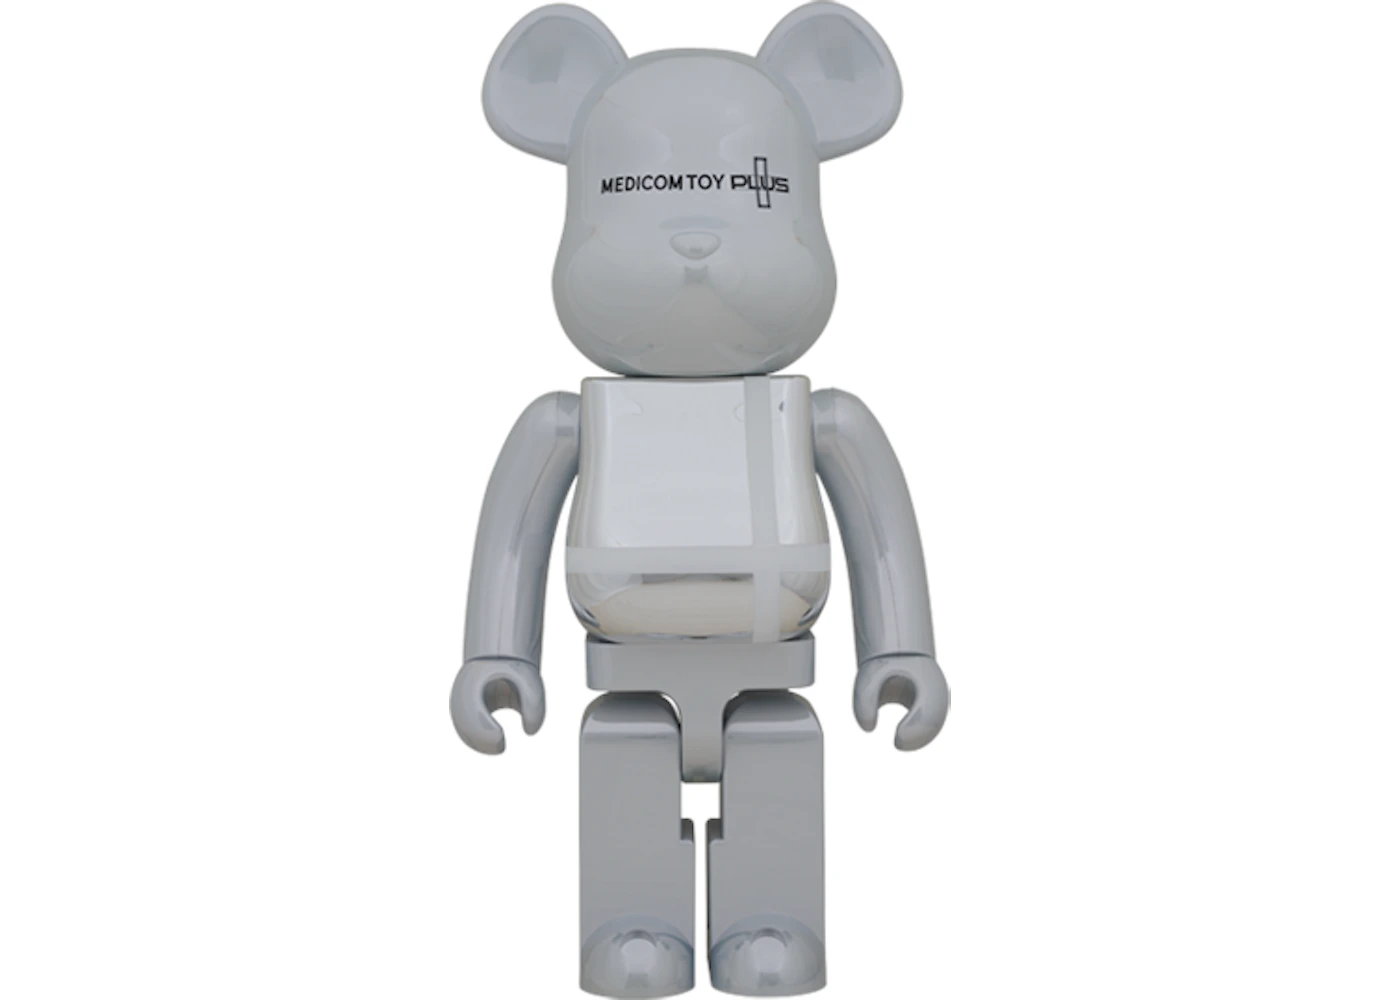 Bearbrick Medicom Toy Plus 1000% White Chrome Ver. - US